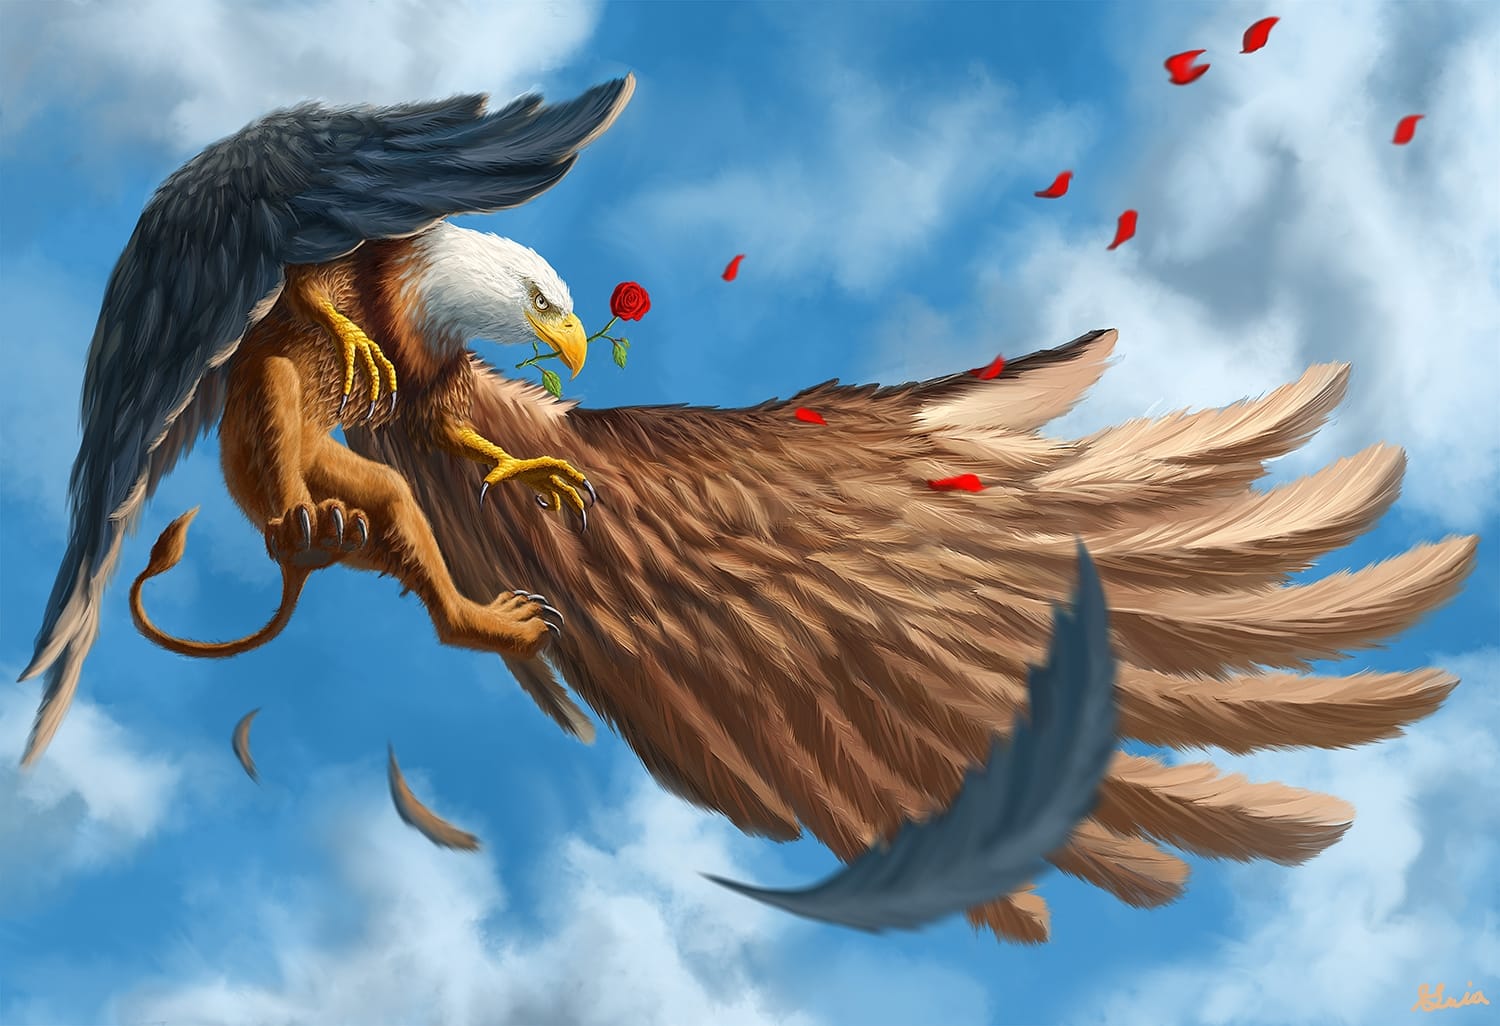 Griffin Rose Flying Creature Illustration